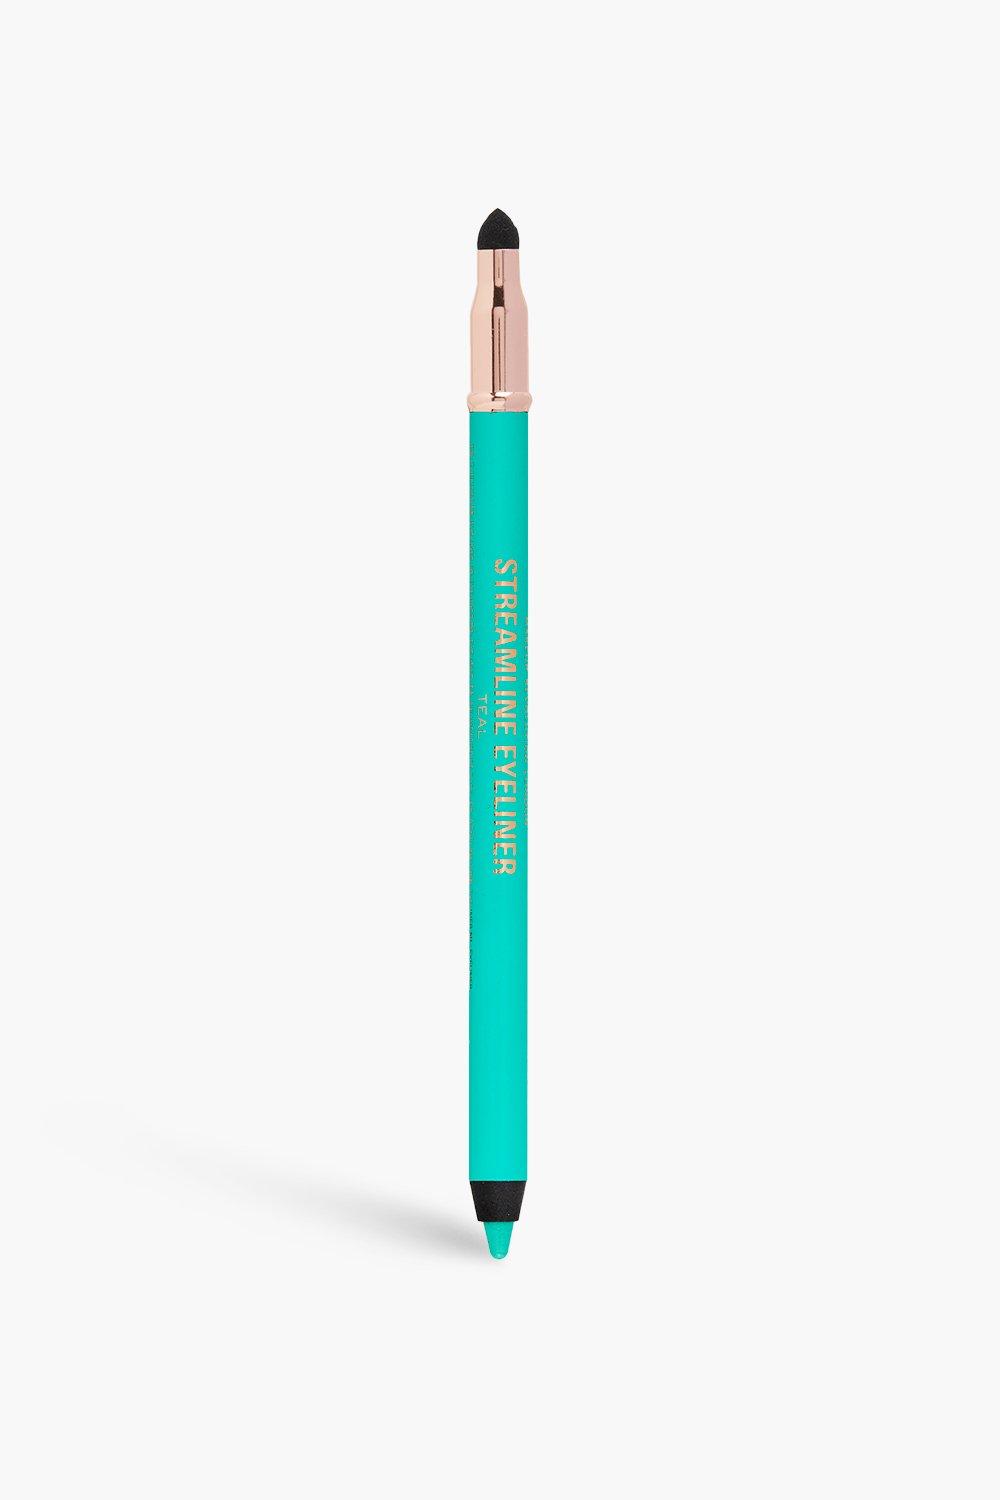 Boohoo Revolution Streamline Waterline Eyeliner Pencil, Teal